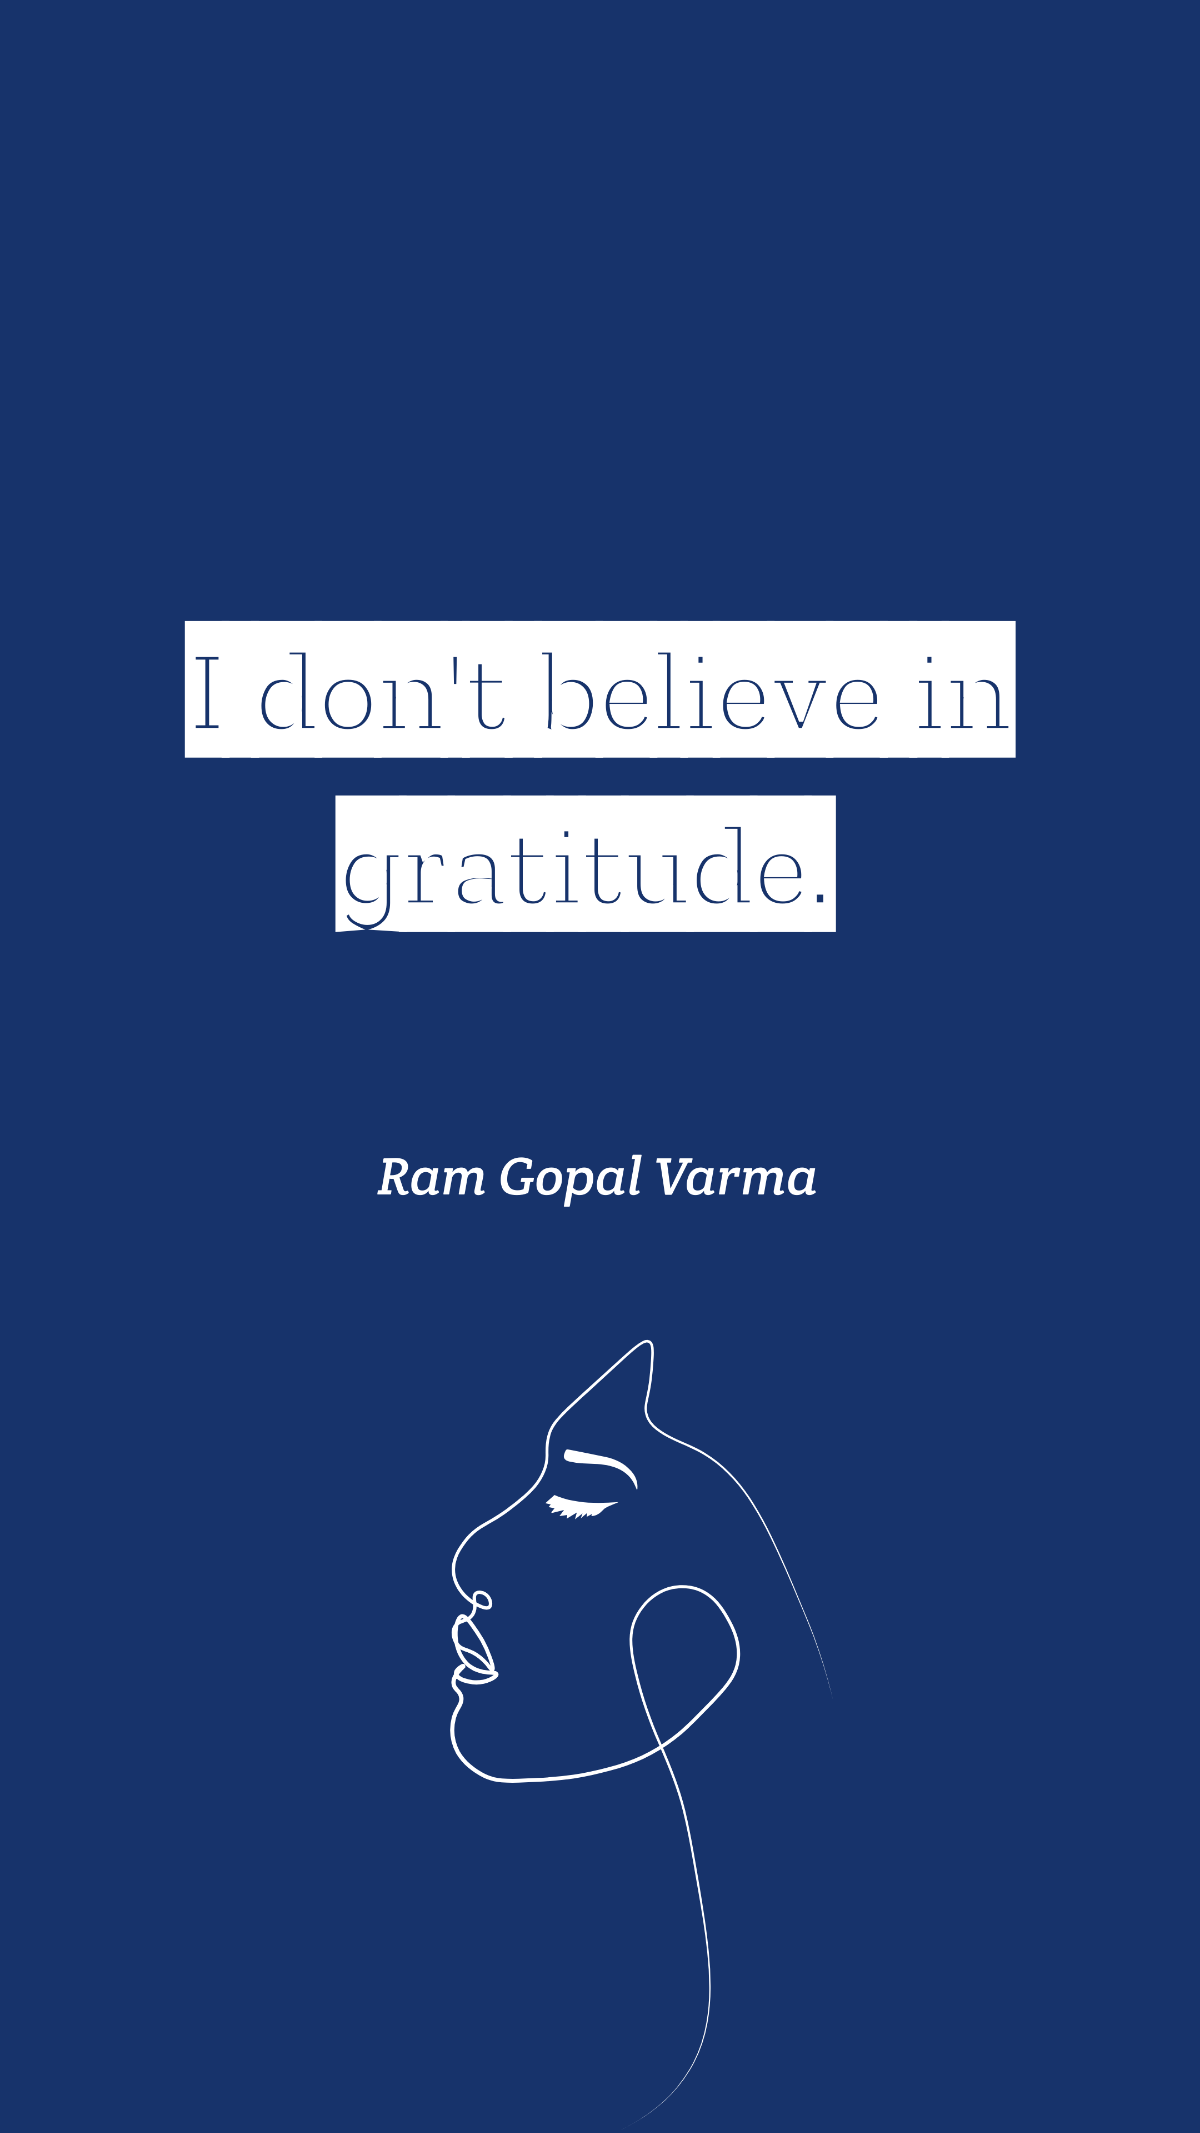 Free Ram Gopal Varma - I don't believe in gratitude.  Template